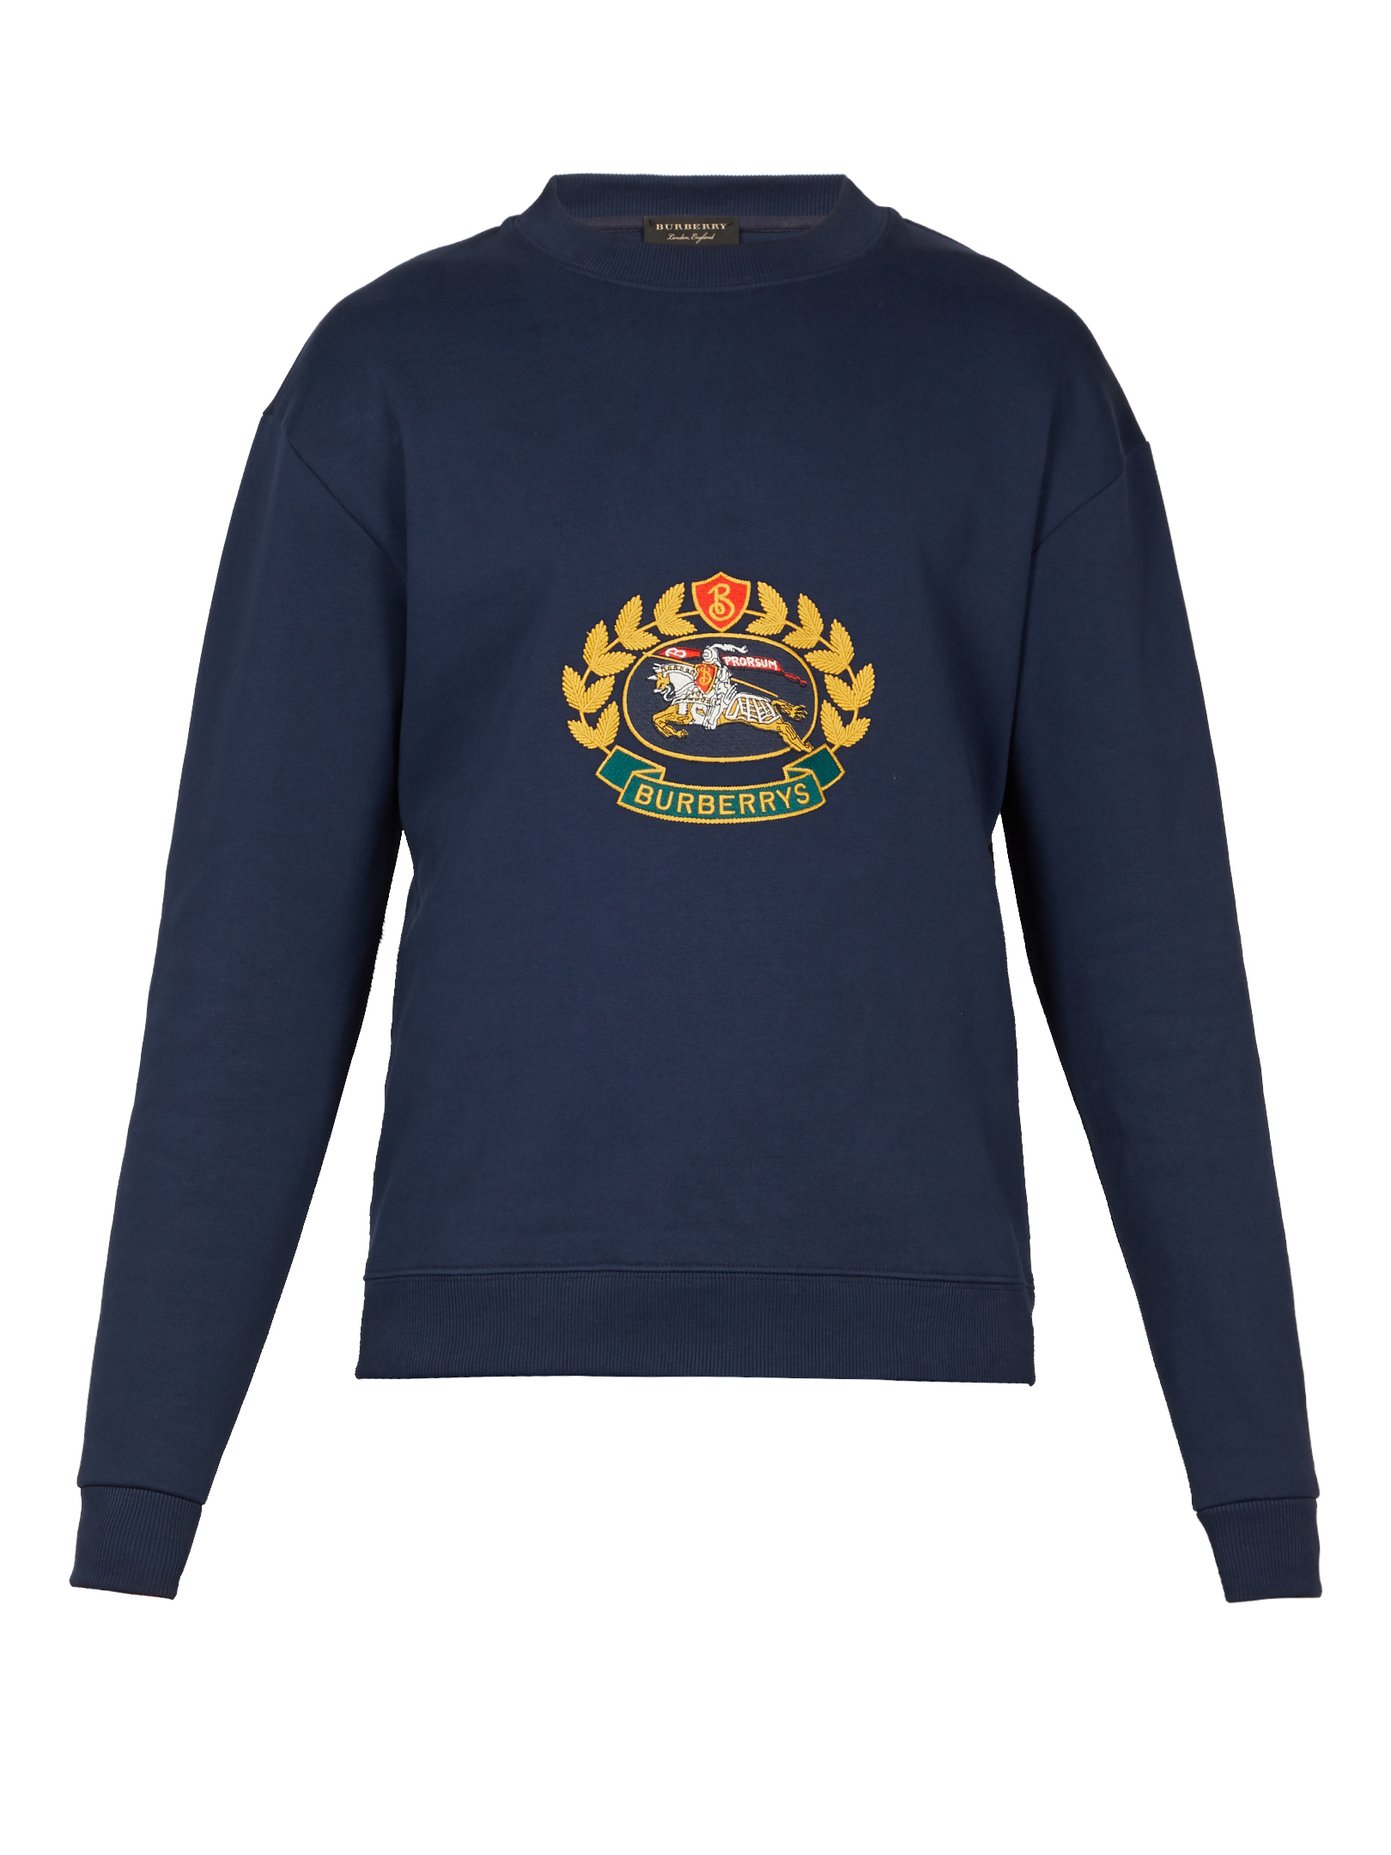 burberry logo embroidered sweatshirt